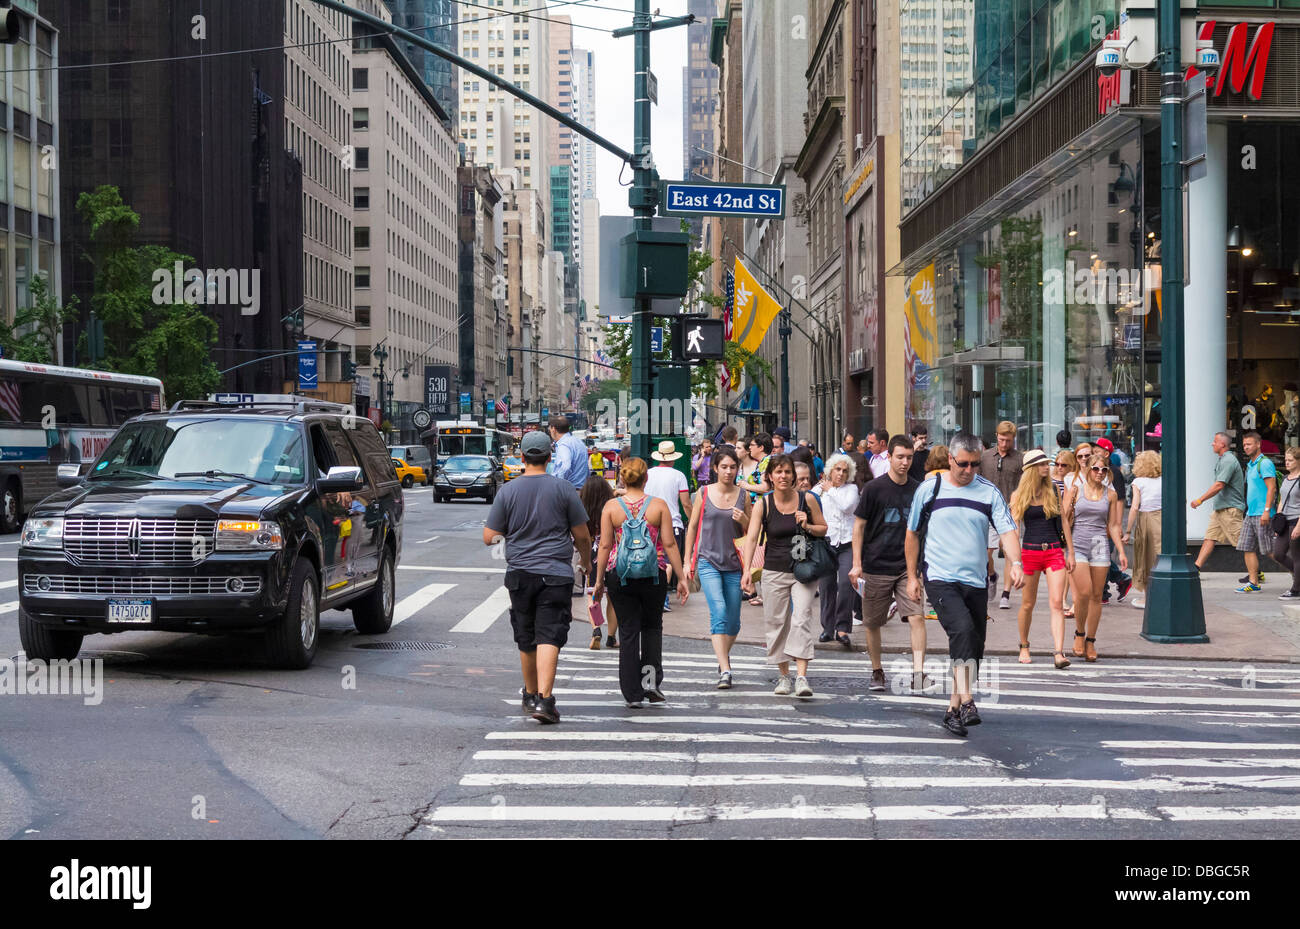 Manhattan New York street scene - people walking across a downtown crosswalk in Manhattan, New York City in summer Stock Photo